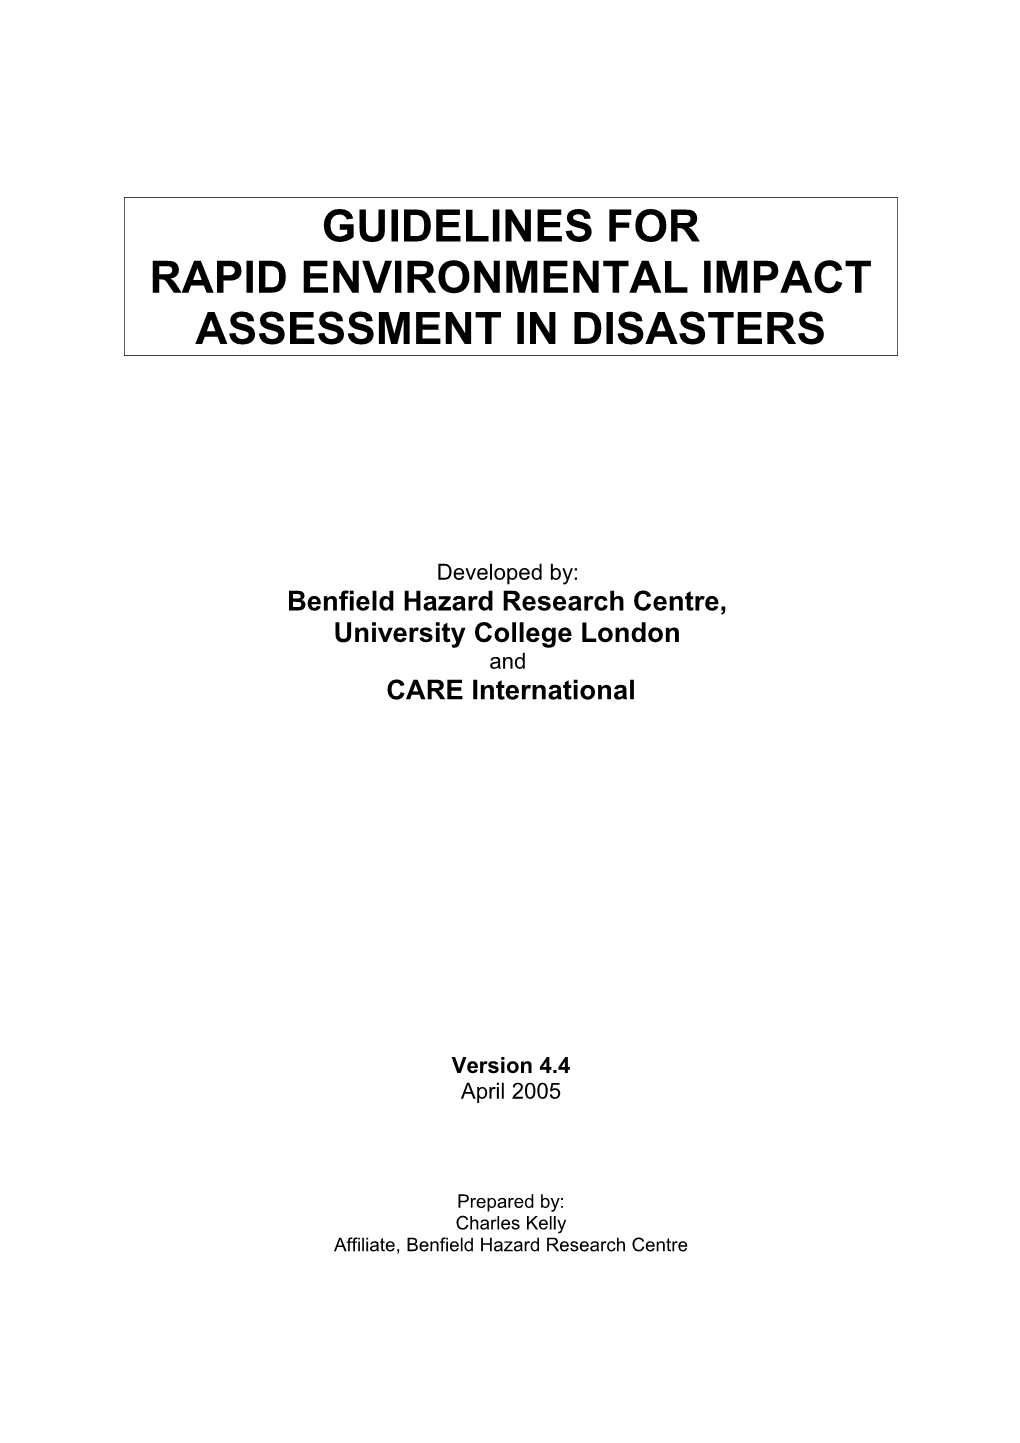 Rapid Environmental Impact Assessment in Disasters